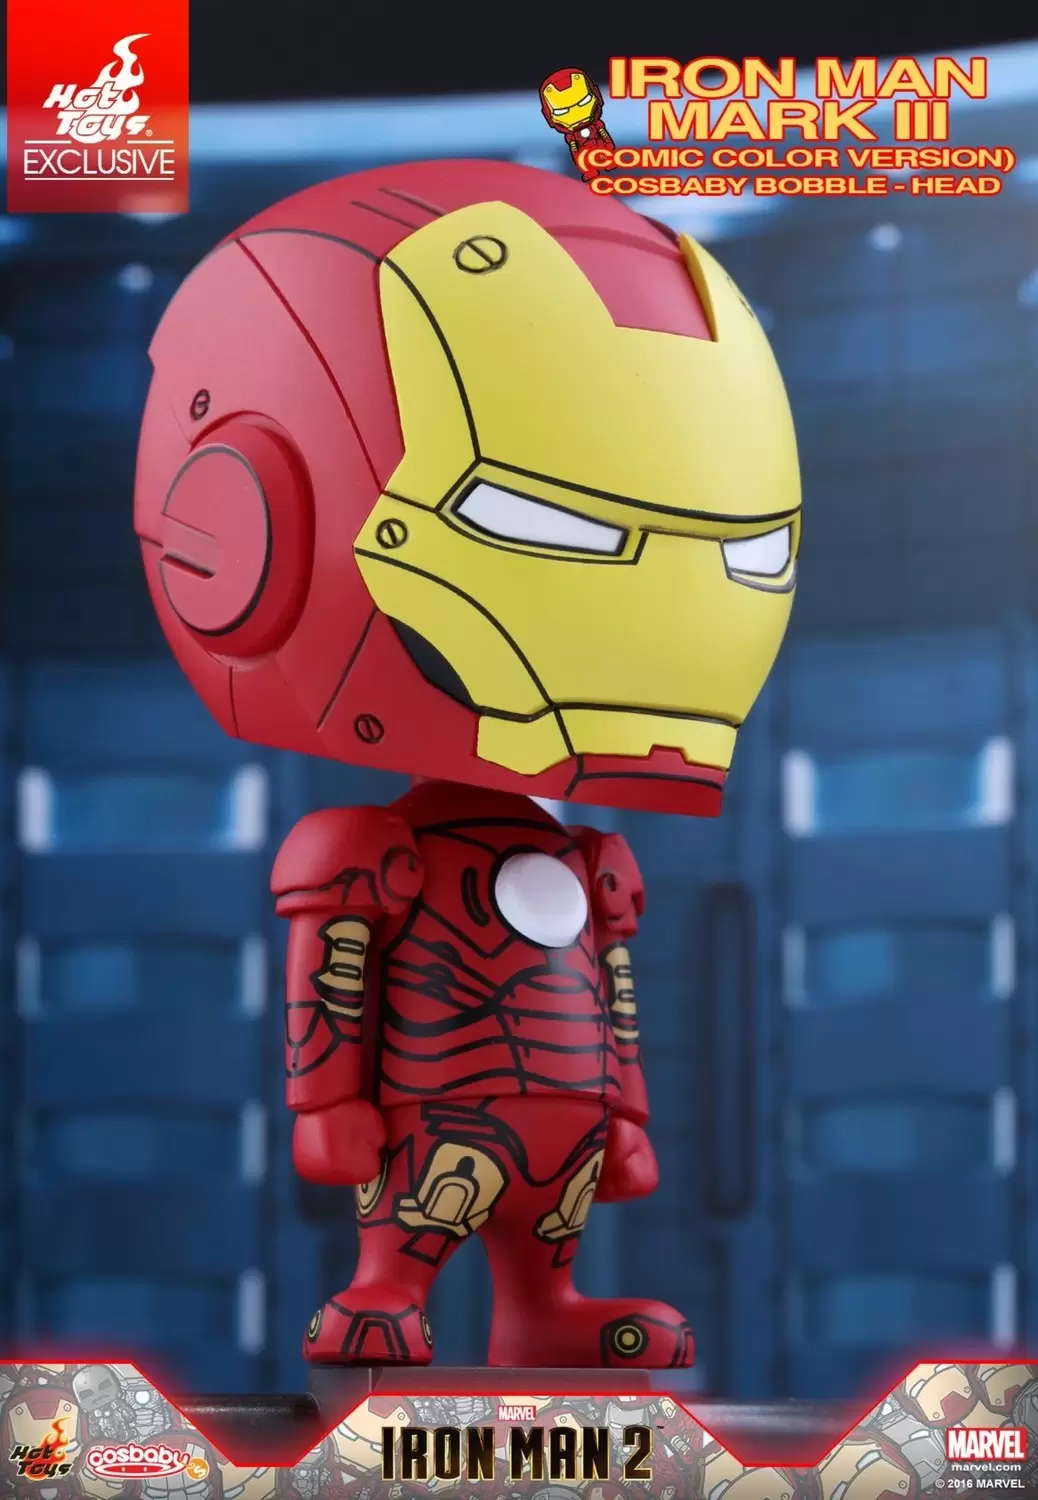 Cosbaby Figures - Iron Man Mark III Comic Color Version